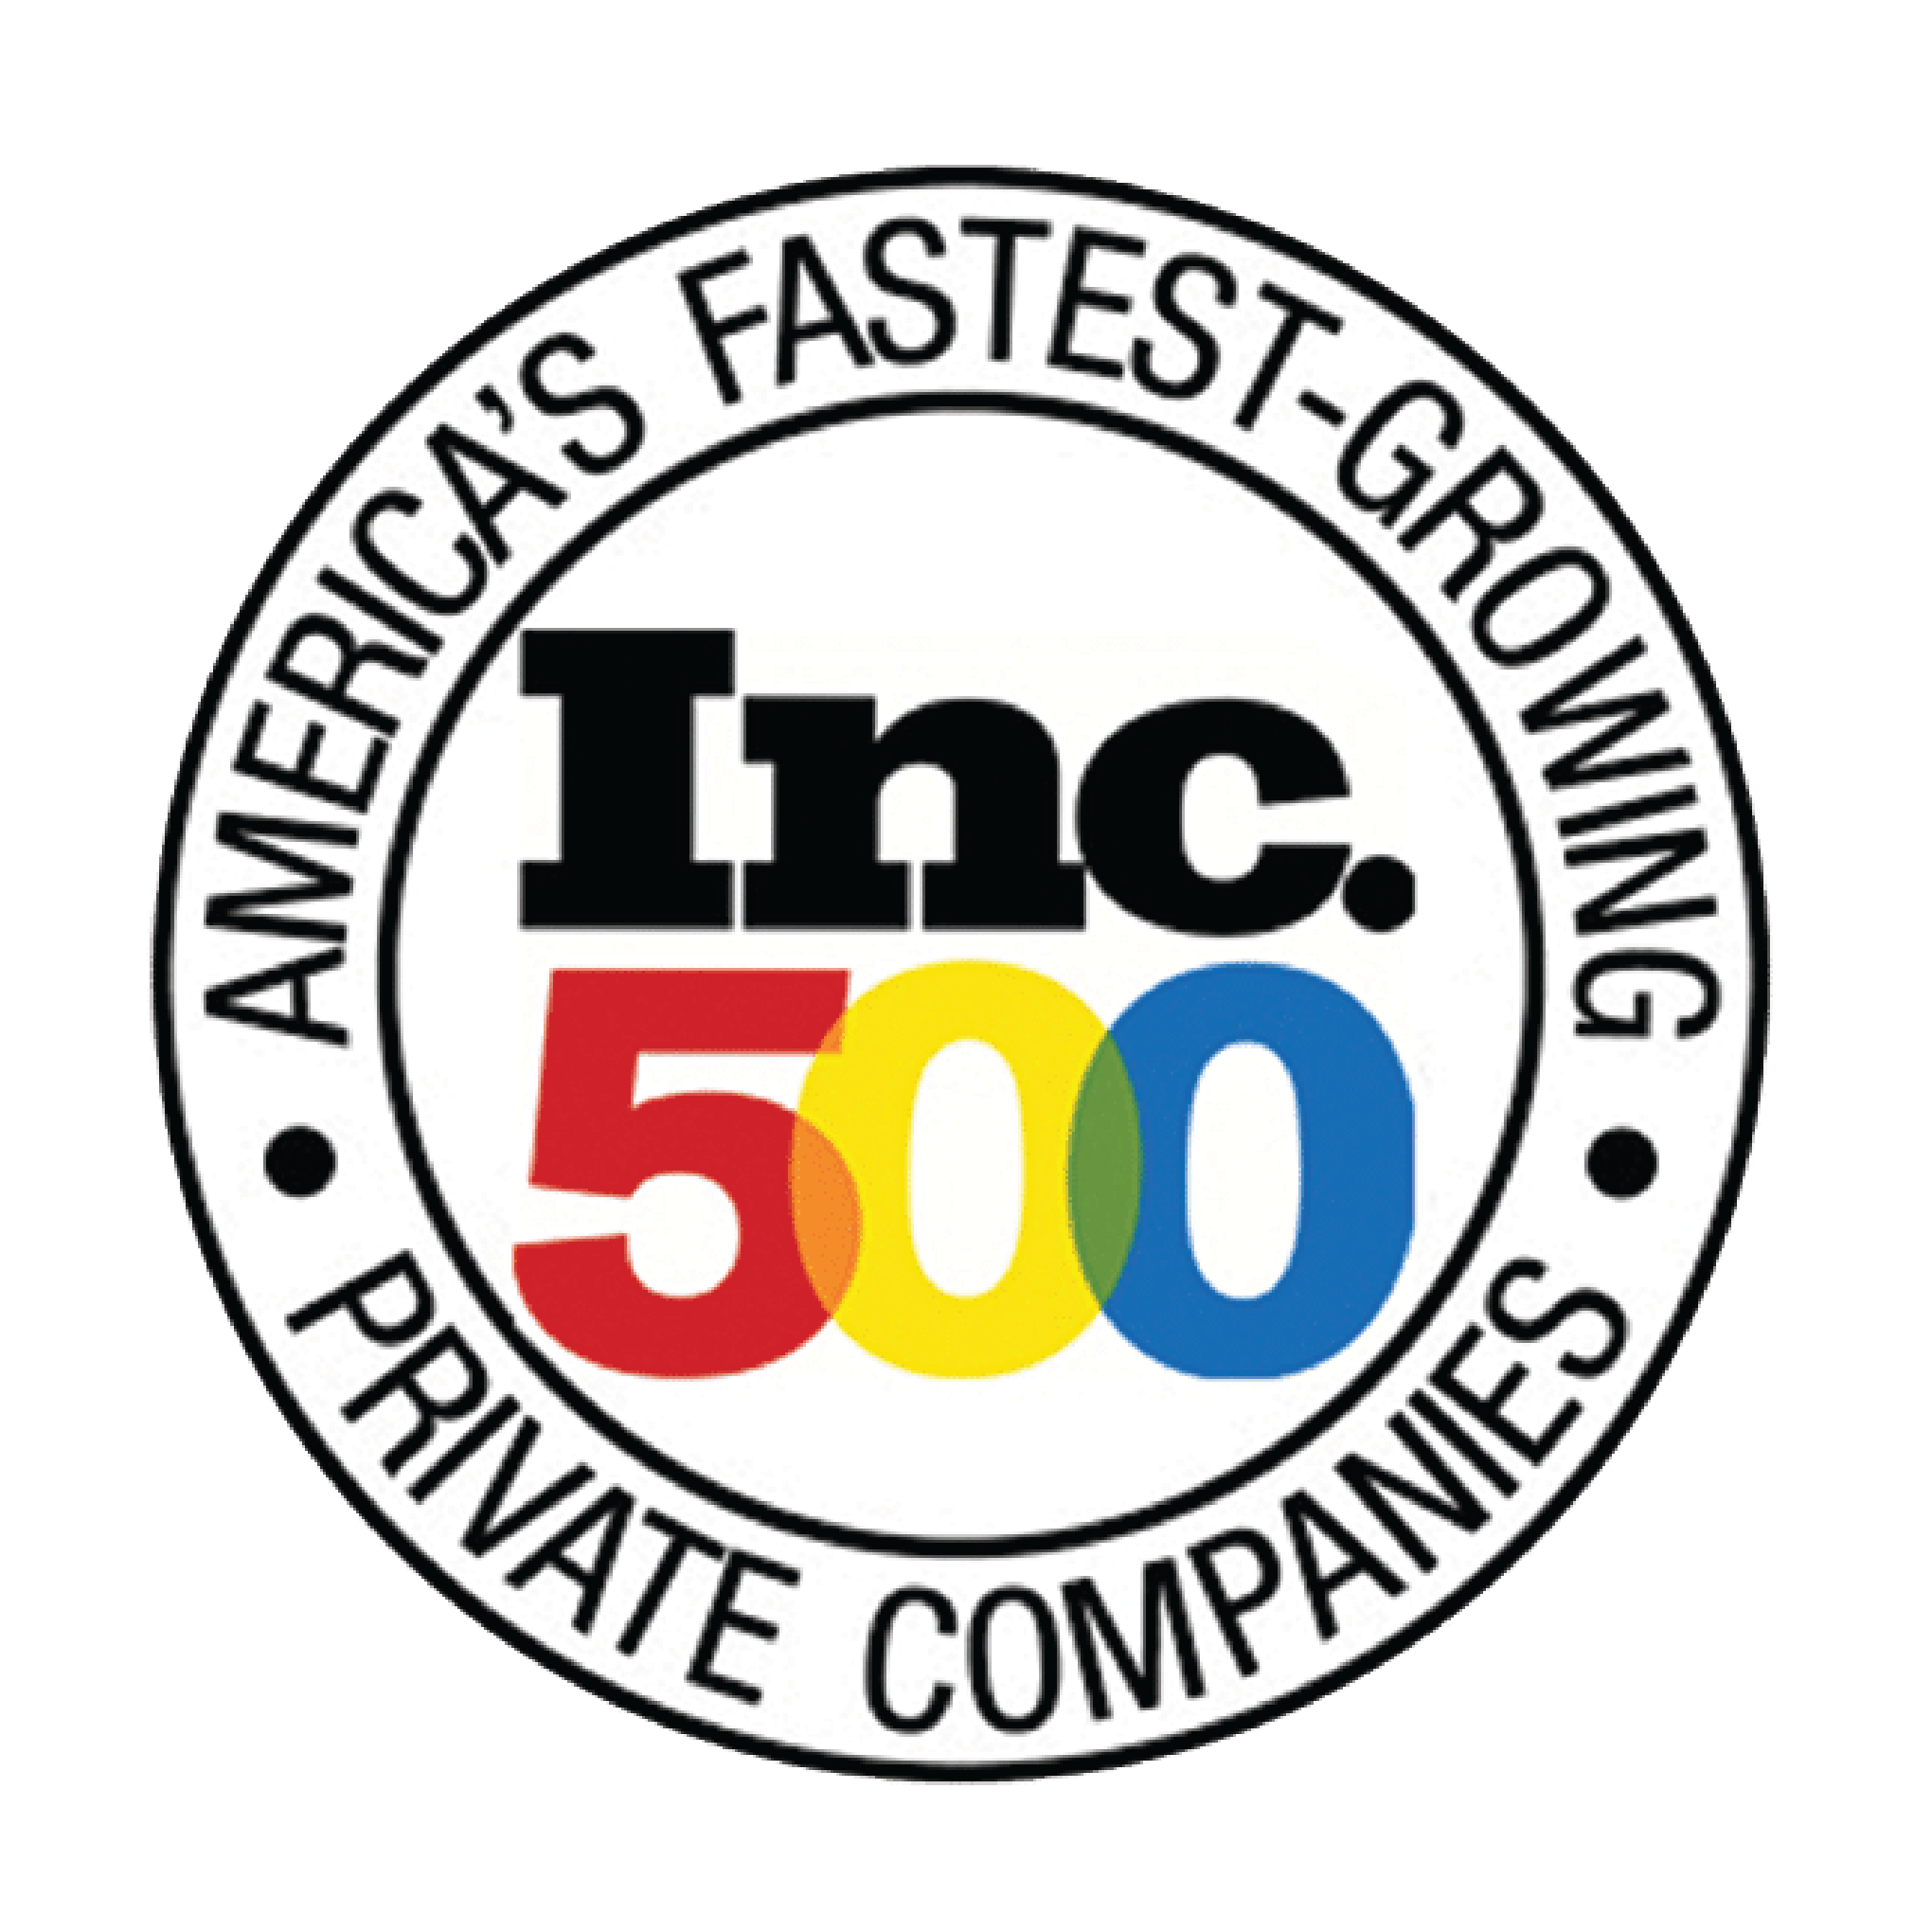 America's fastest growing 5000 companies 2017 & 2019